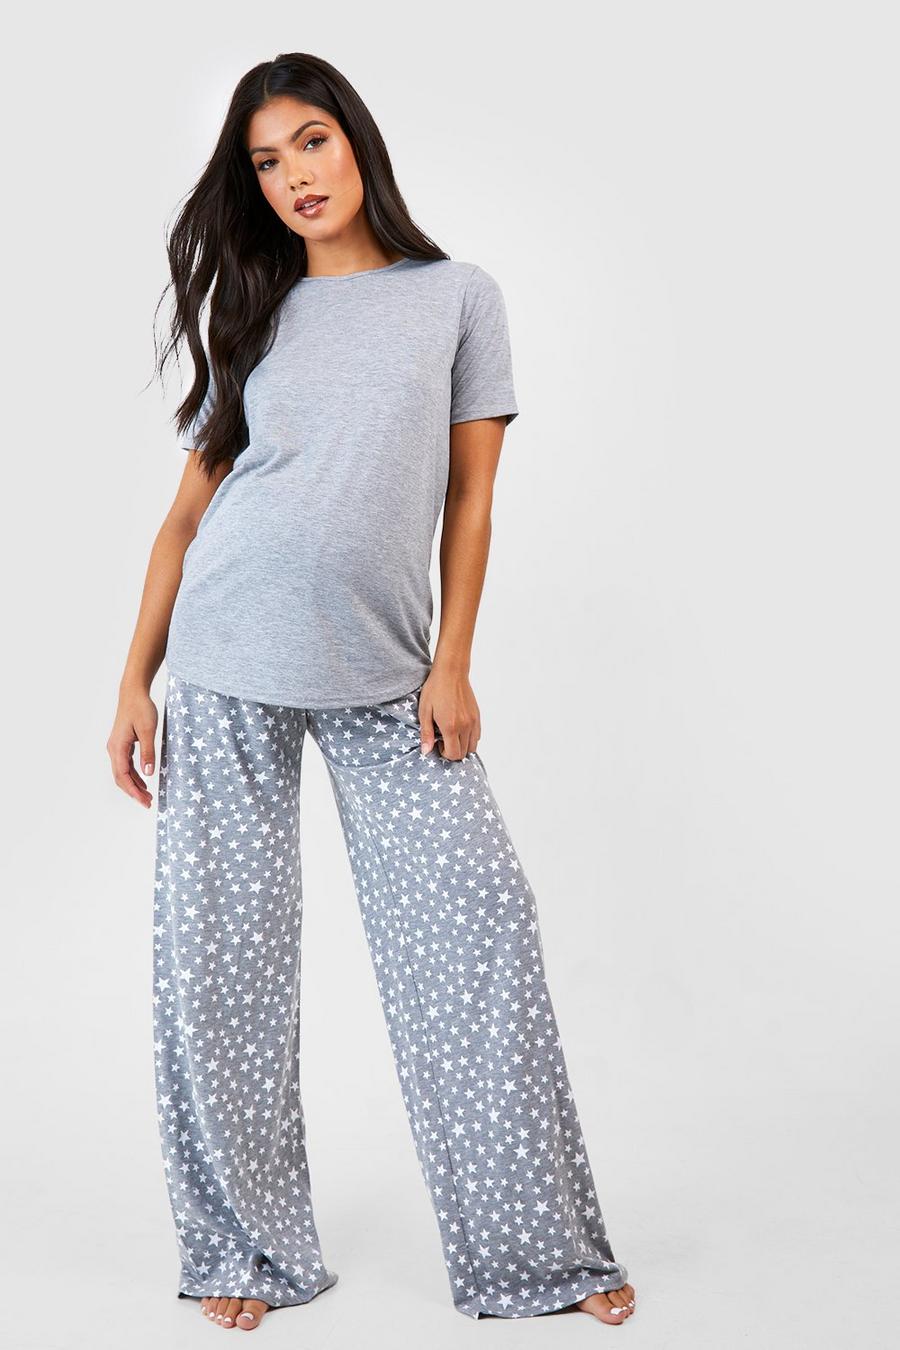 https://media.boohoo.com/i/boohoo/gzz69229_grey_xl/female-grey-maternity-star-print-trouser-pyjama-set/?w=900&qlt=default&fmt.jp2.qlt=70&fmt=auto&sm=fit